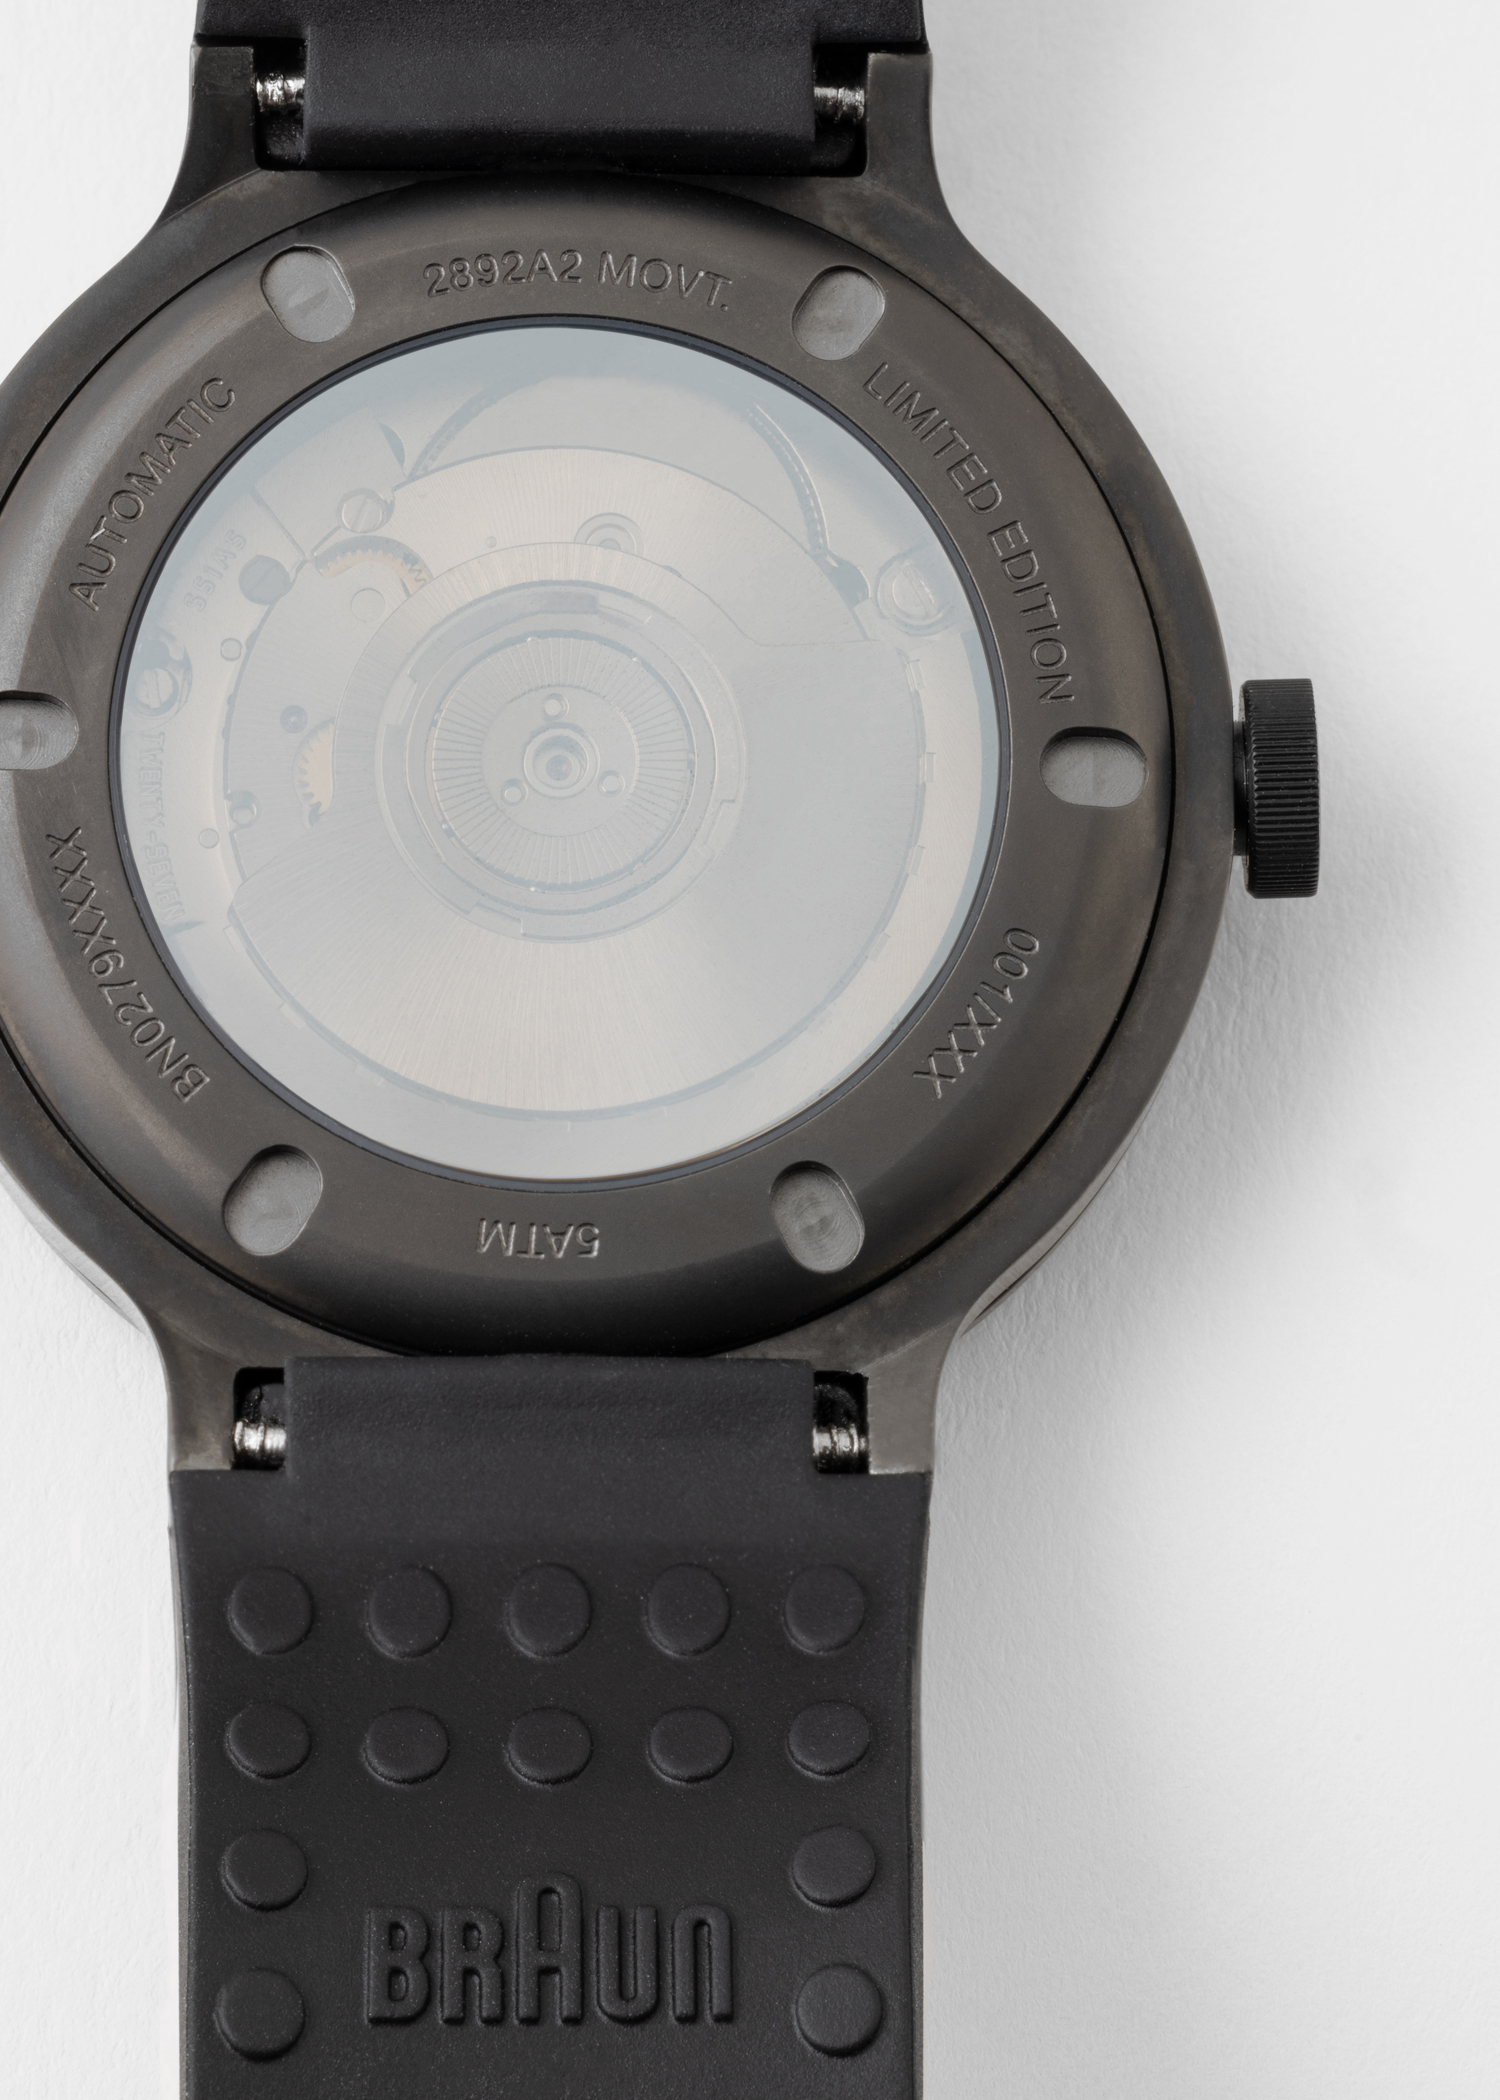 The Paul Smith + Braun Swiss-Made Watch